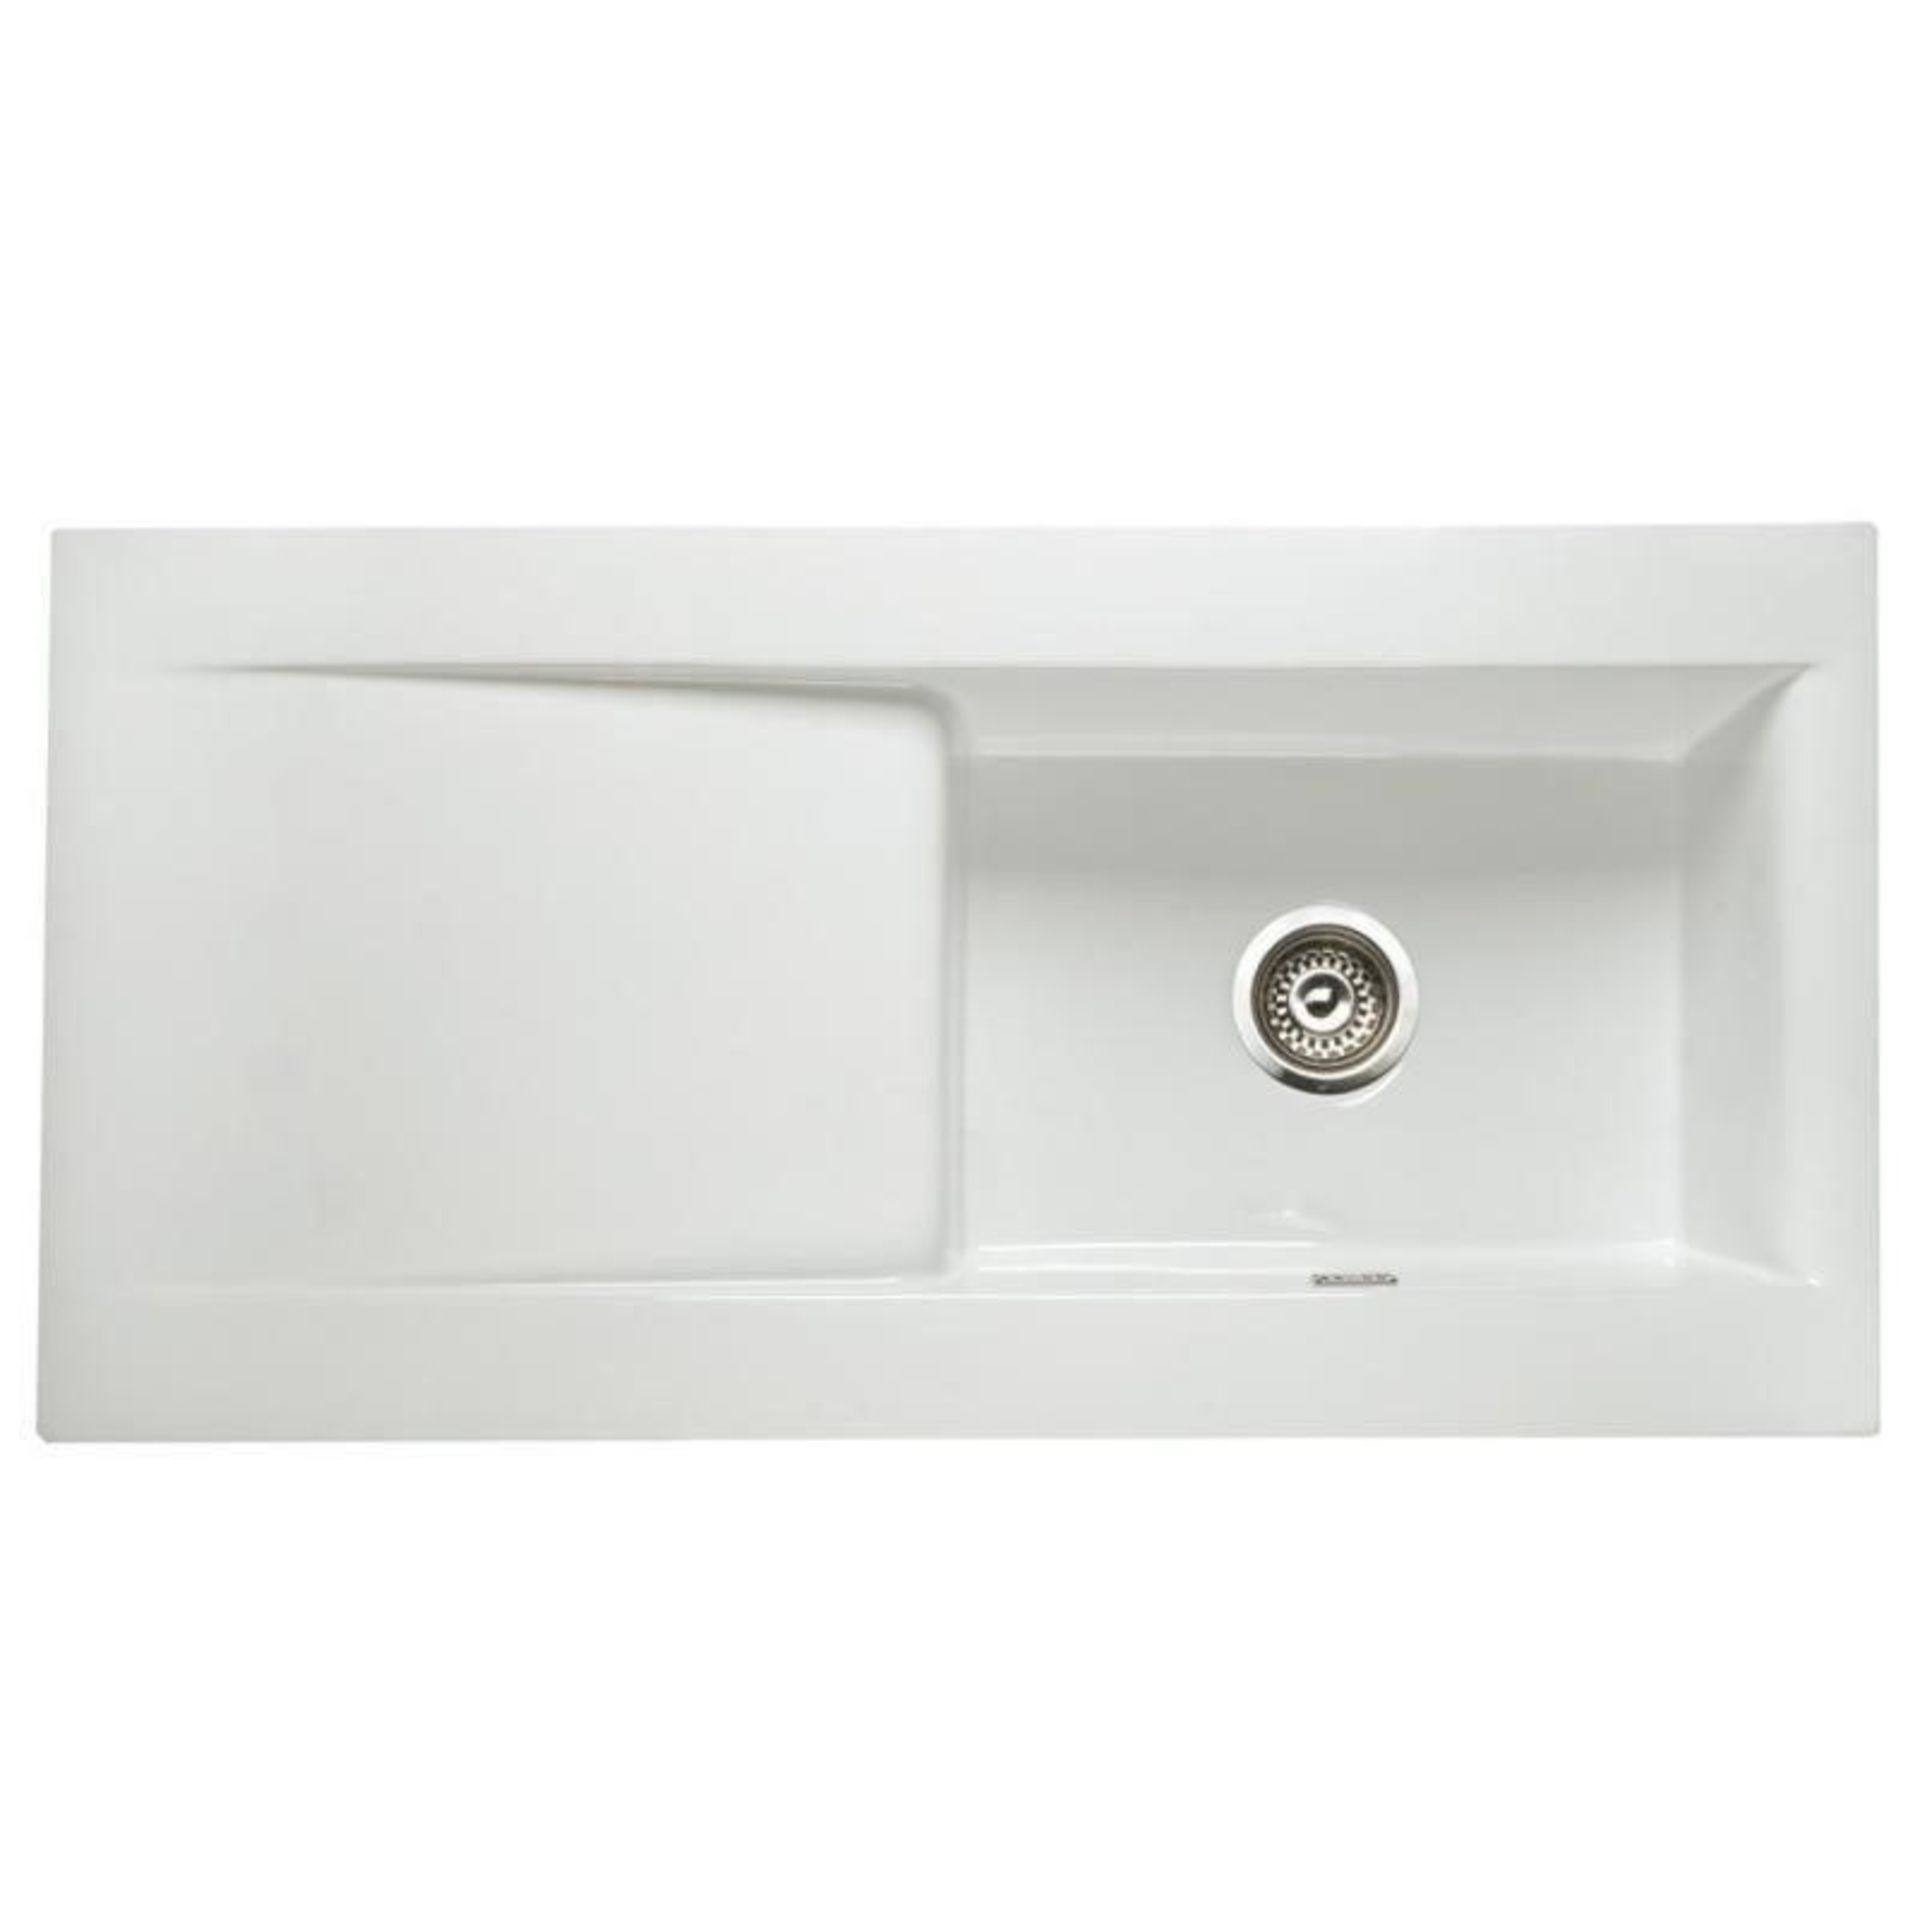 1 x RAK Ceramics Gourmet Dream Sink 2 (DREAMSINK2) - Reversible 1.0 Bowl White Ceramic Kitchen